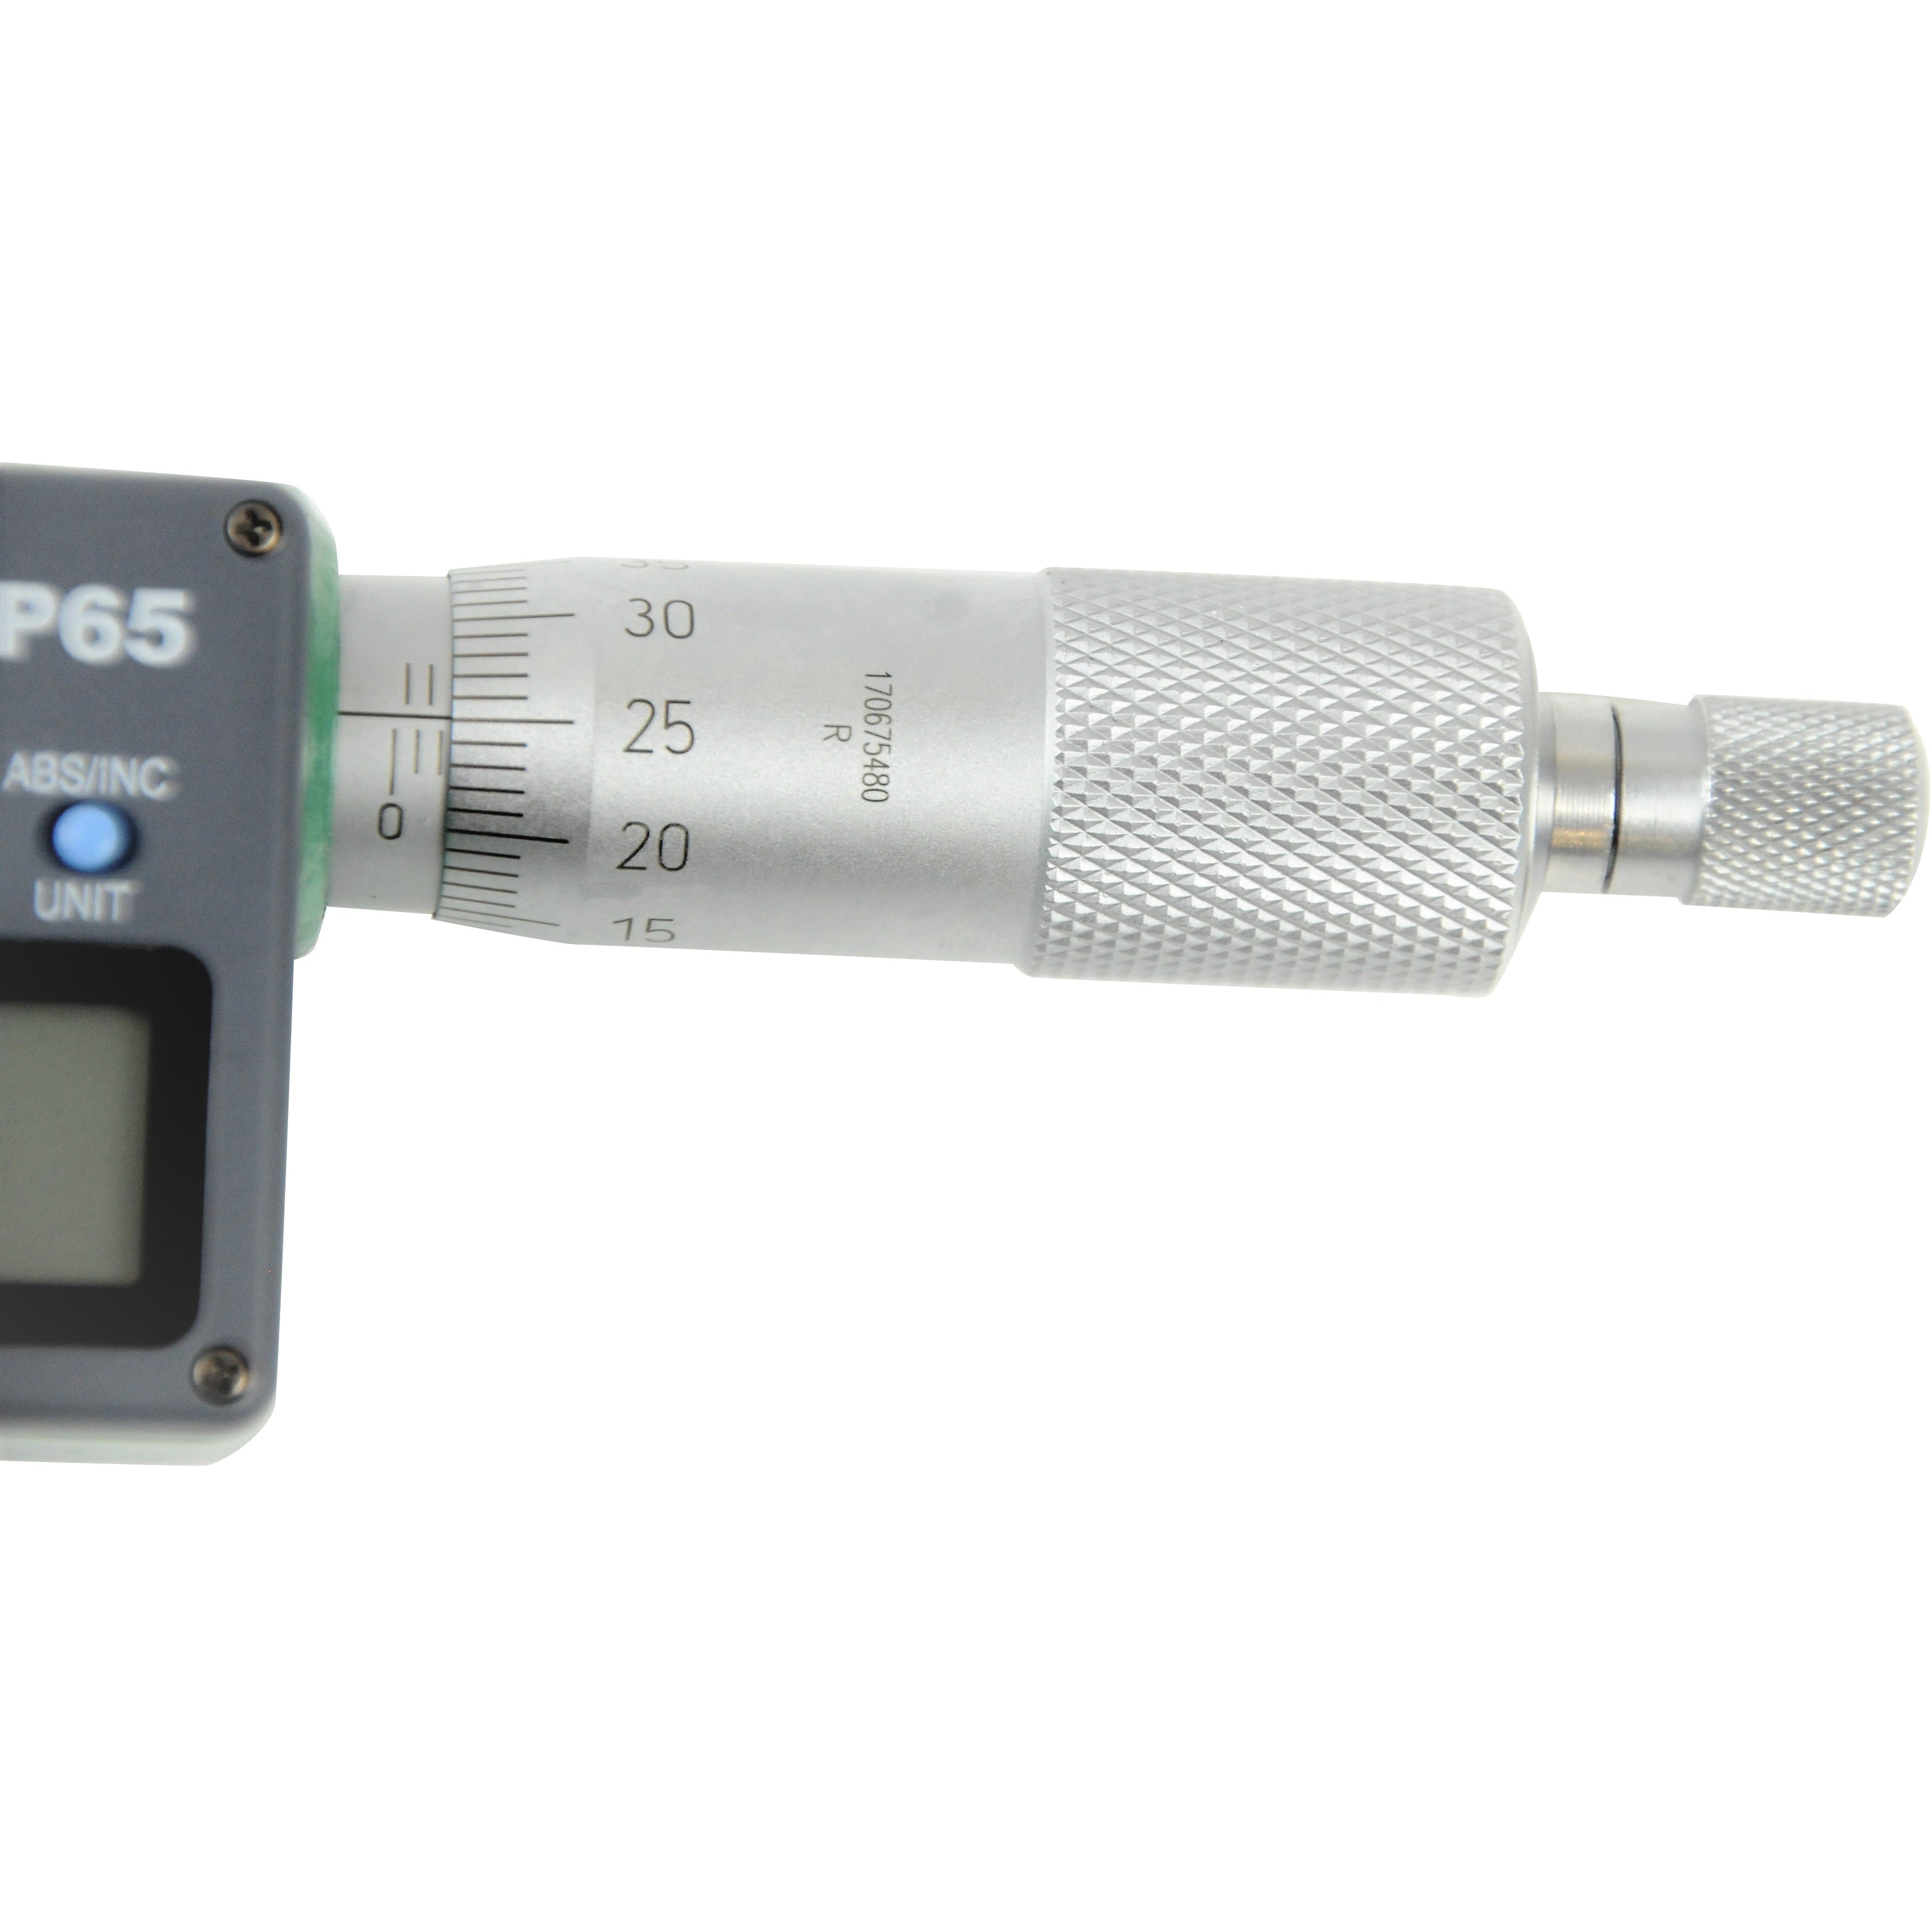 Insize IP65 Digital Outside Micrometer 0-25mm / 3-4" Range Series 3108-25A